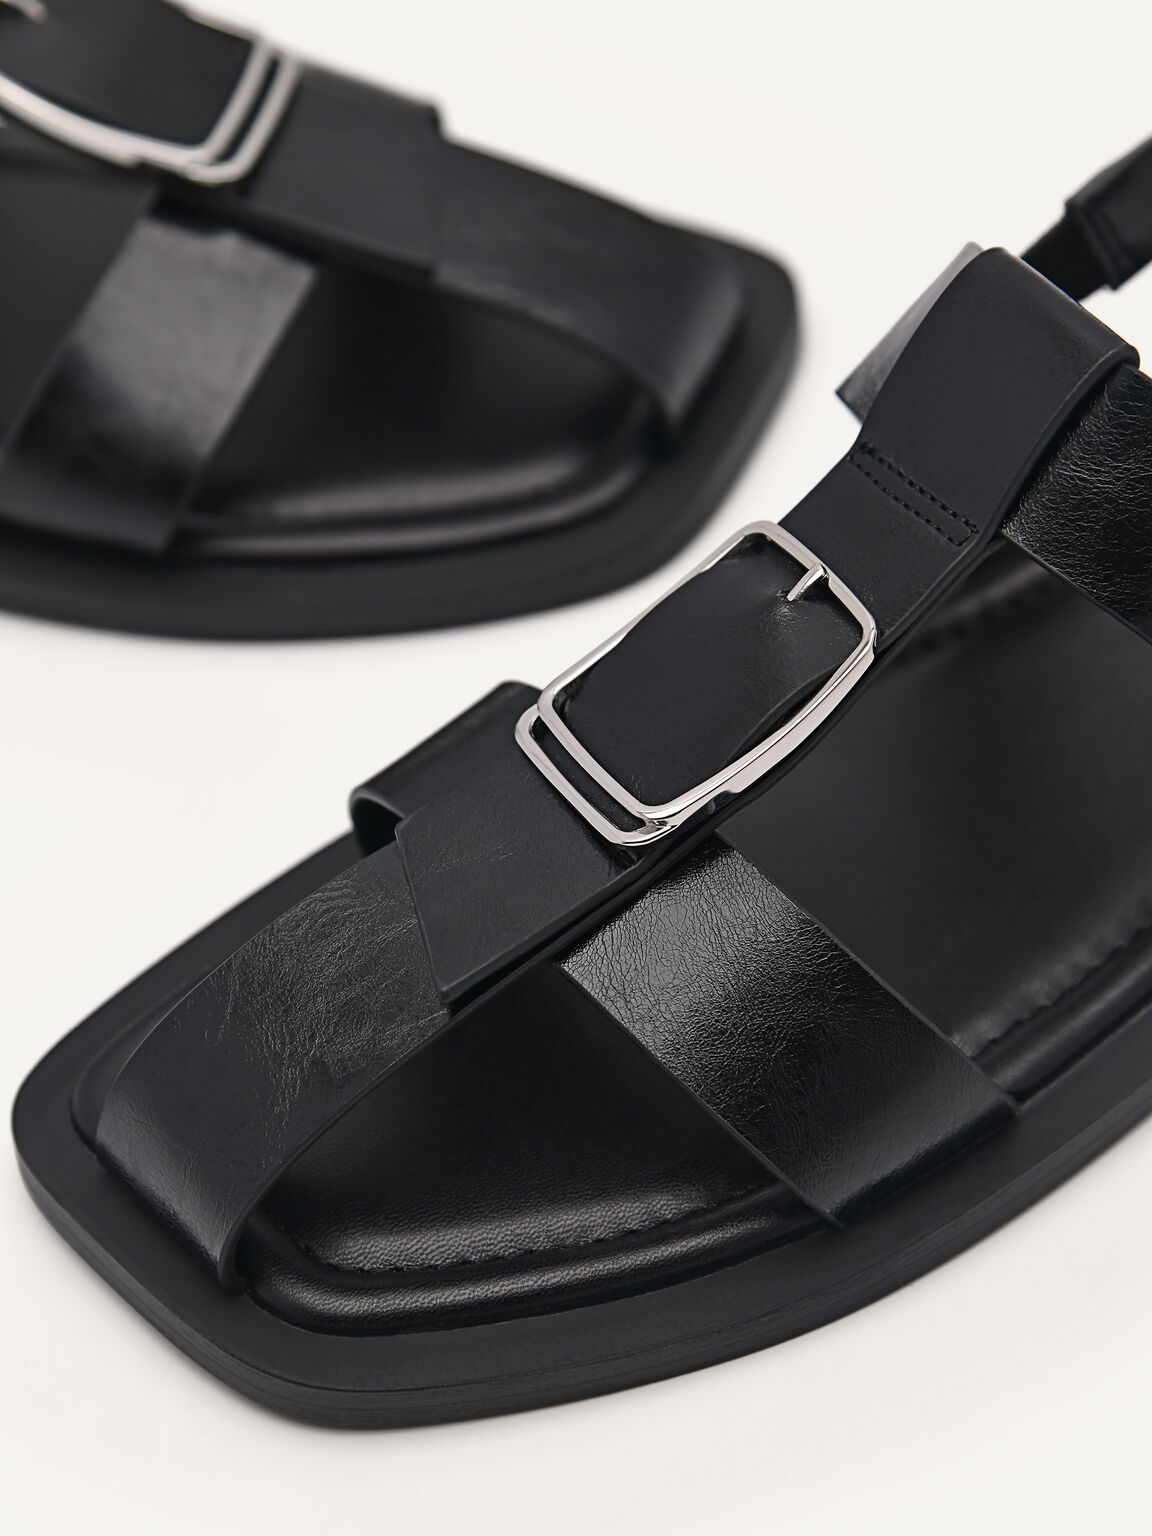 Brno Sandals, Black